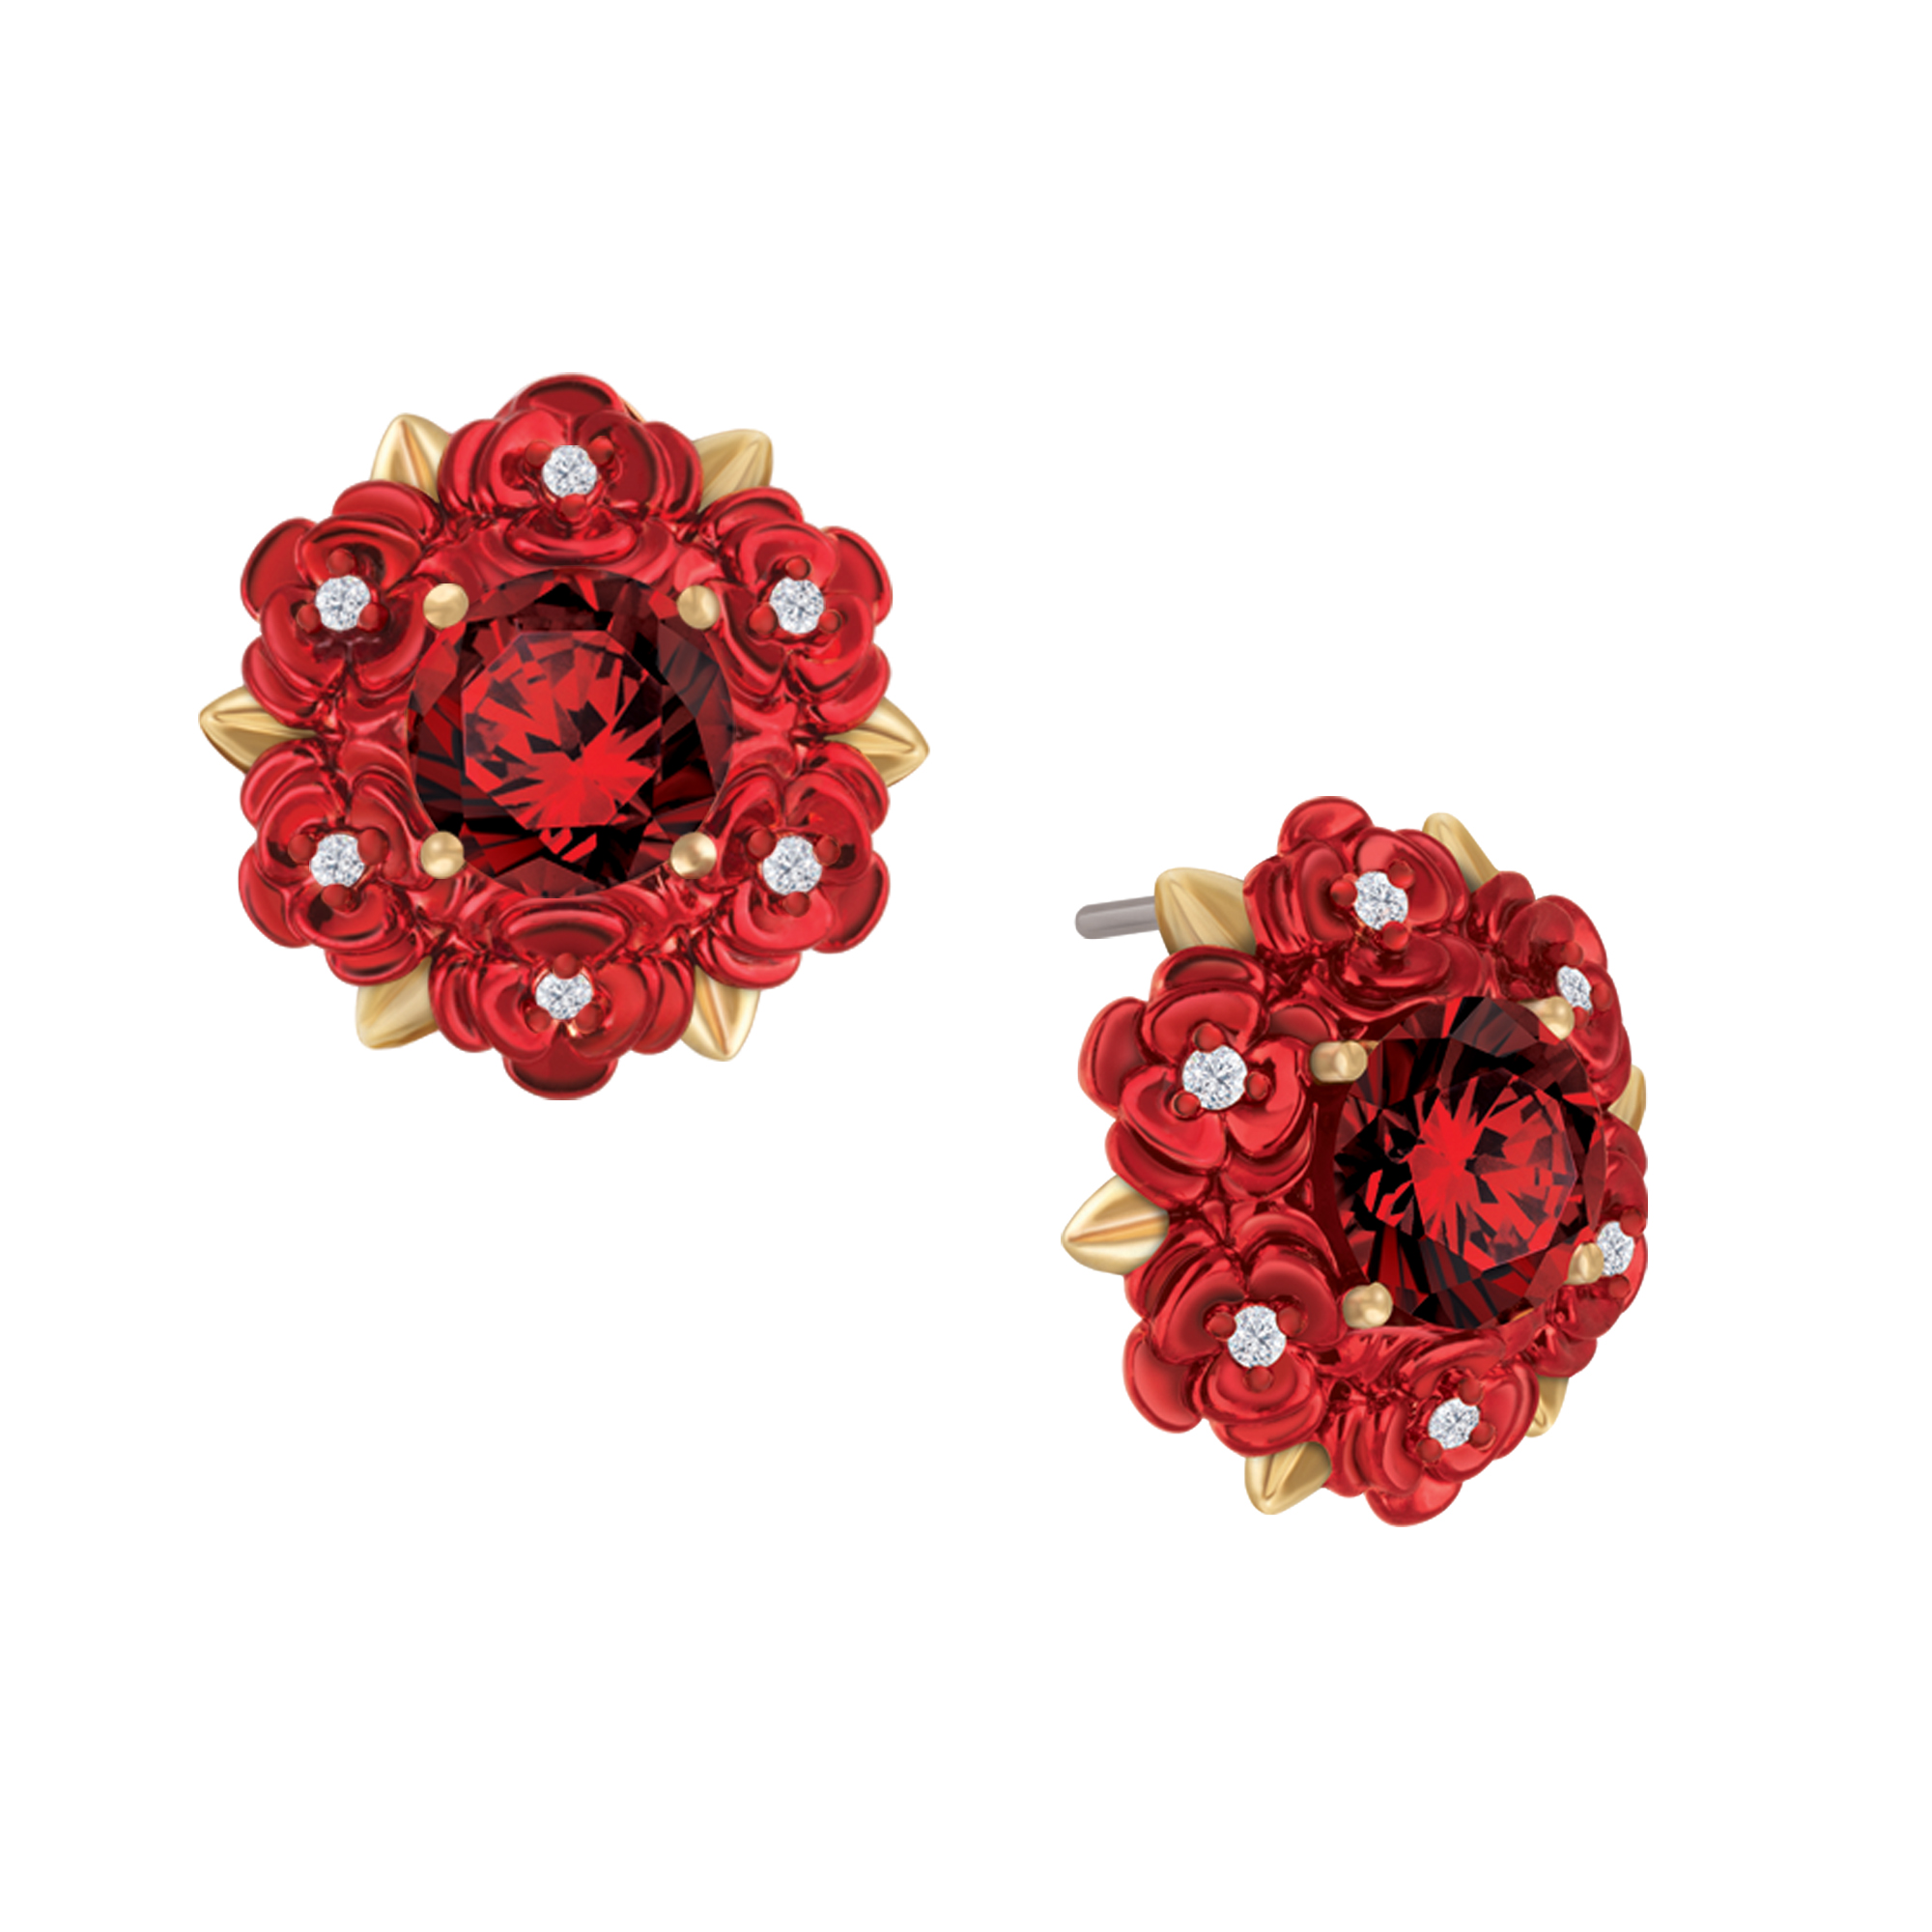 A Dozen Roses Diamond Earrings